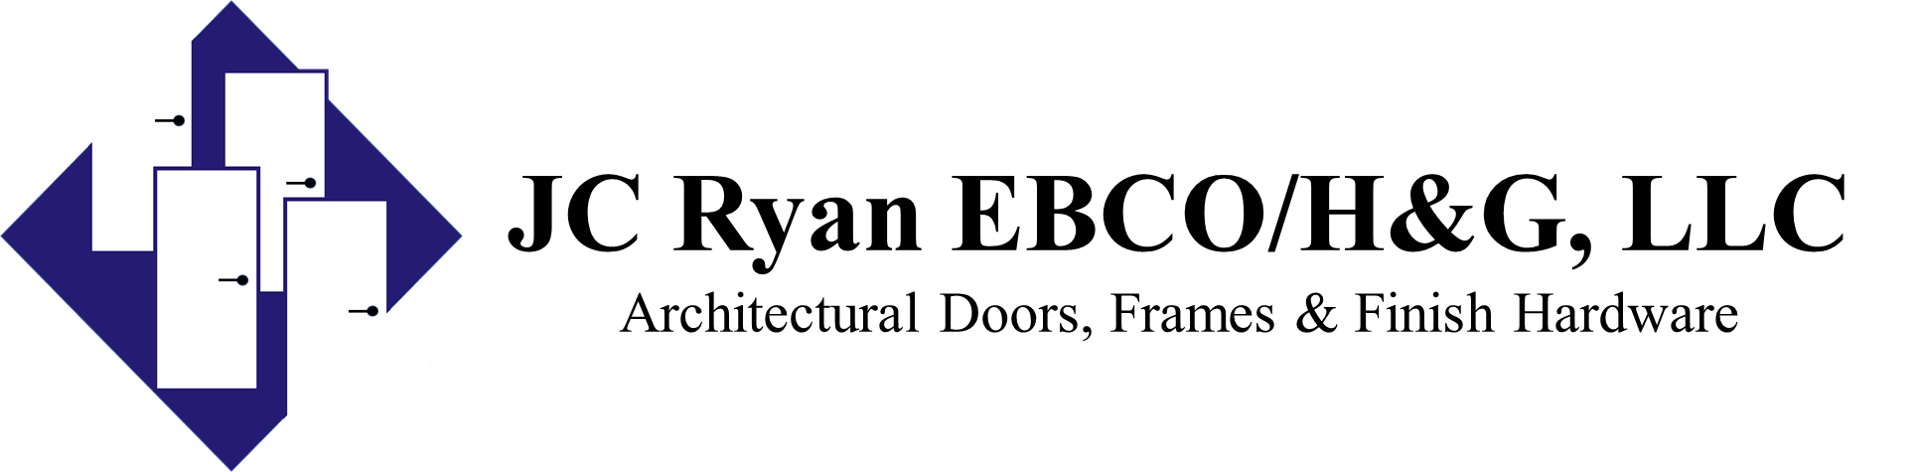 J C Ryan EBCO/H & G LLC